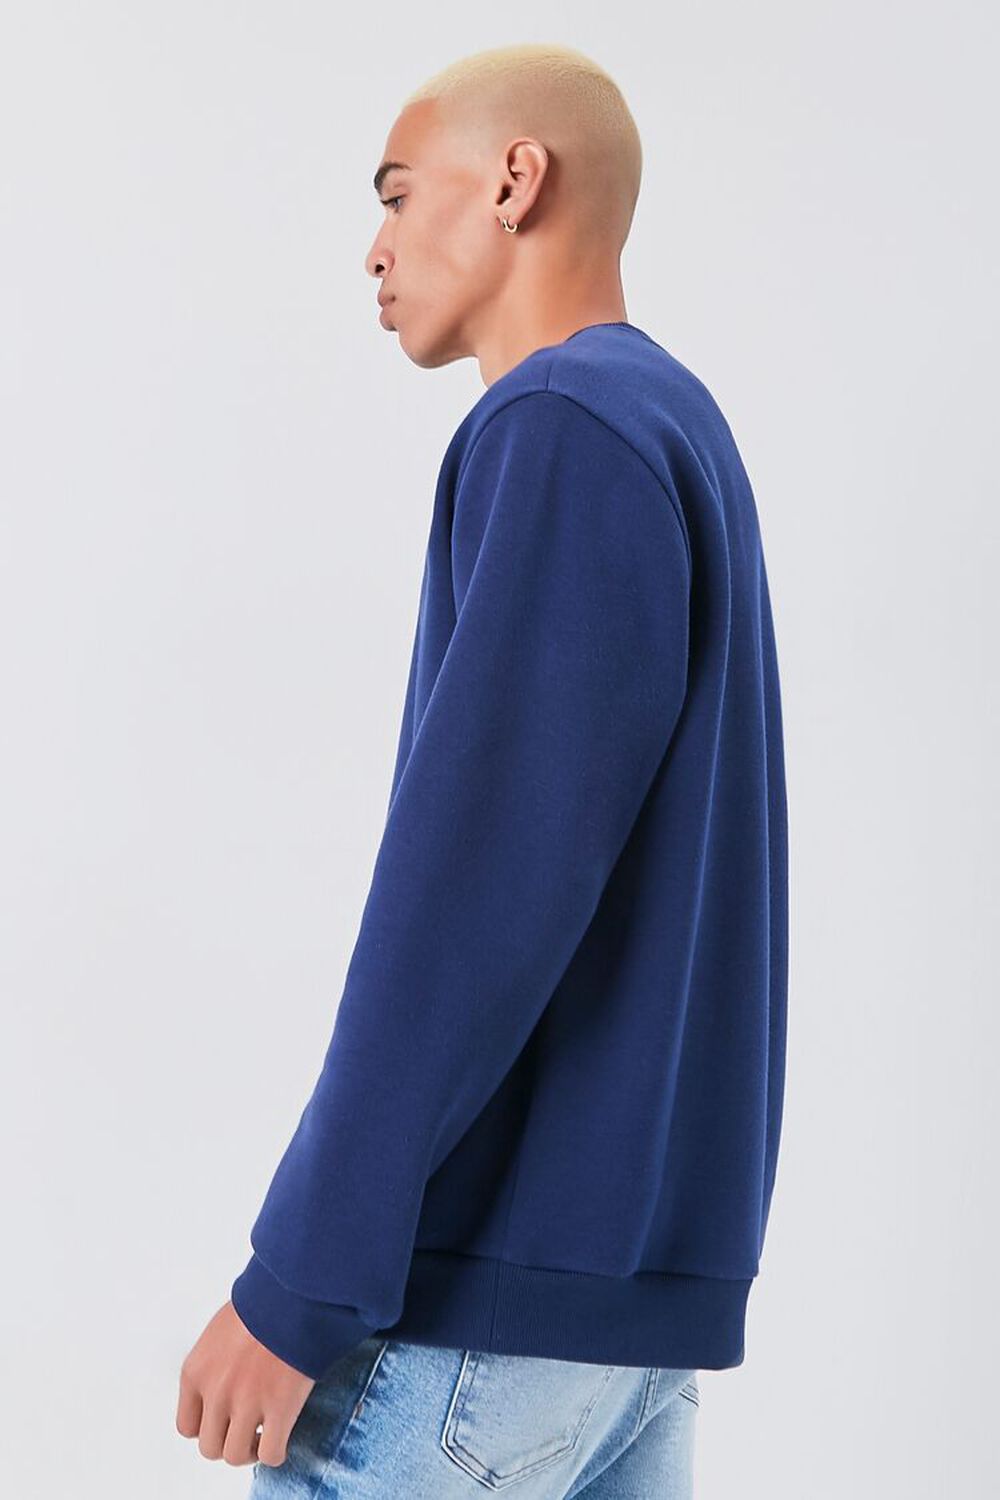 BLUE Basic Drop-Sleeve Sweatshirt, image 2